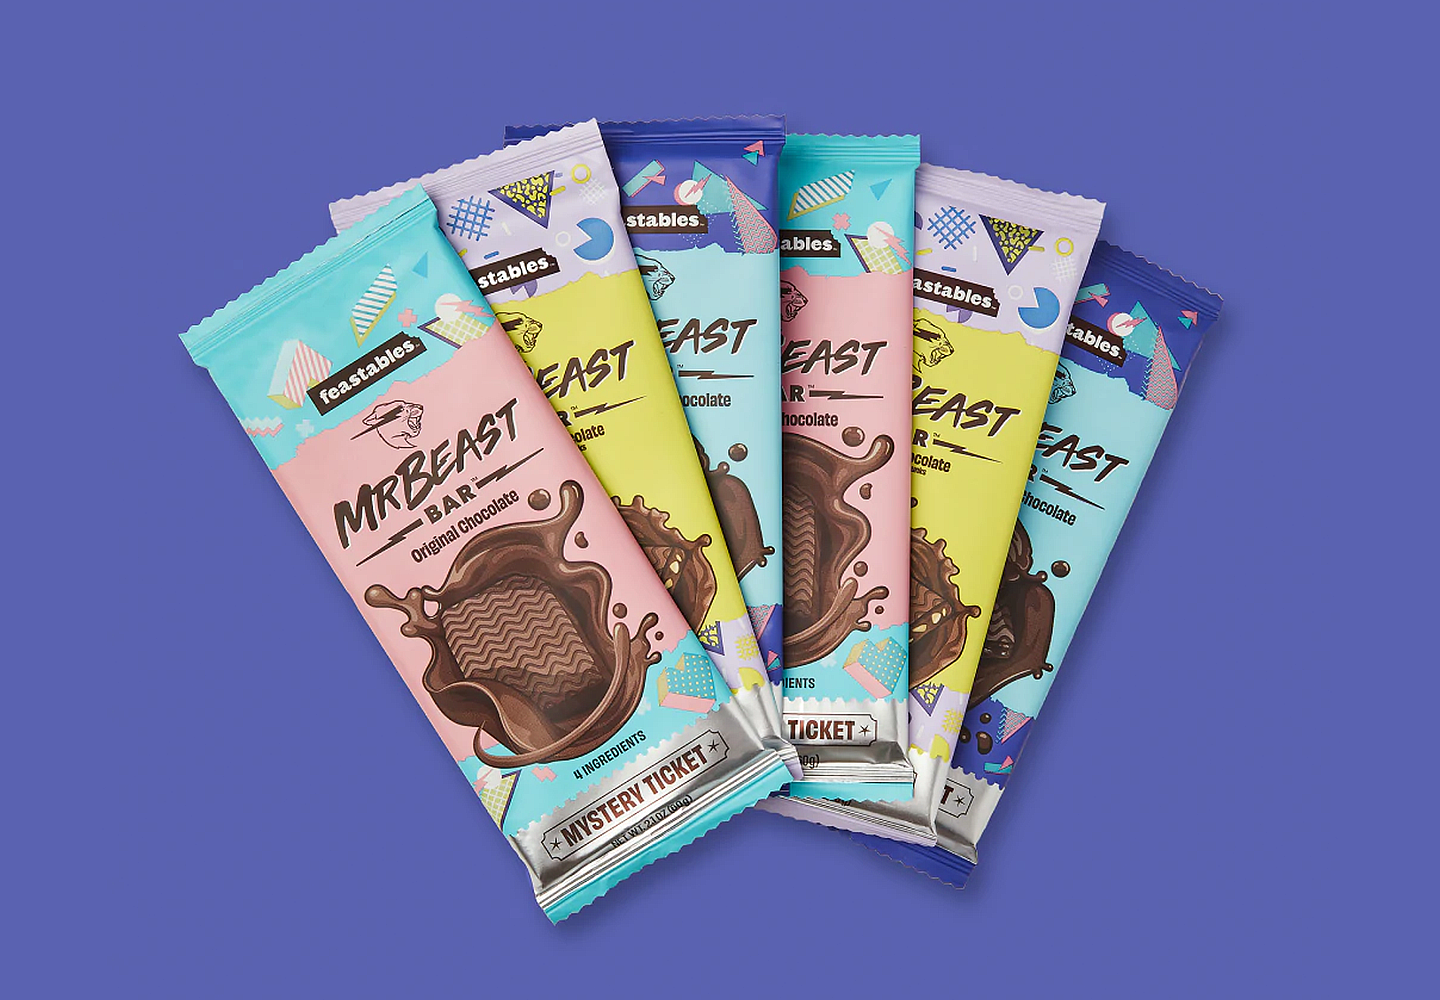 Mr Beast Feastables Chocolate Bars, Food & Drinks, Packaged